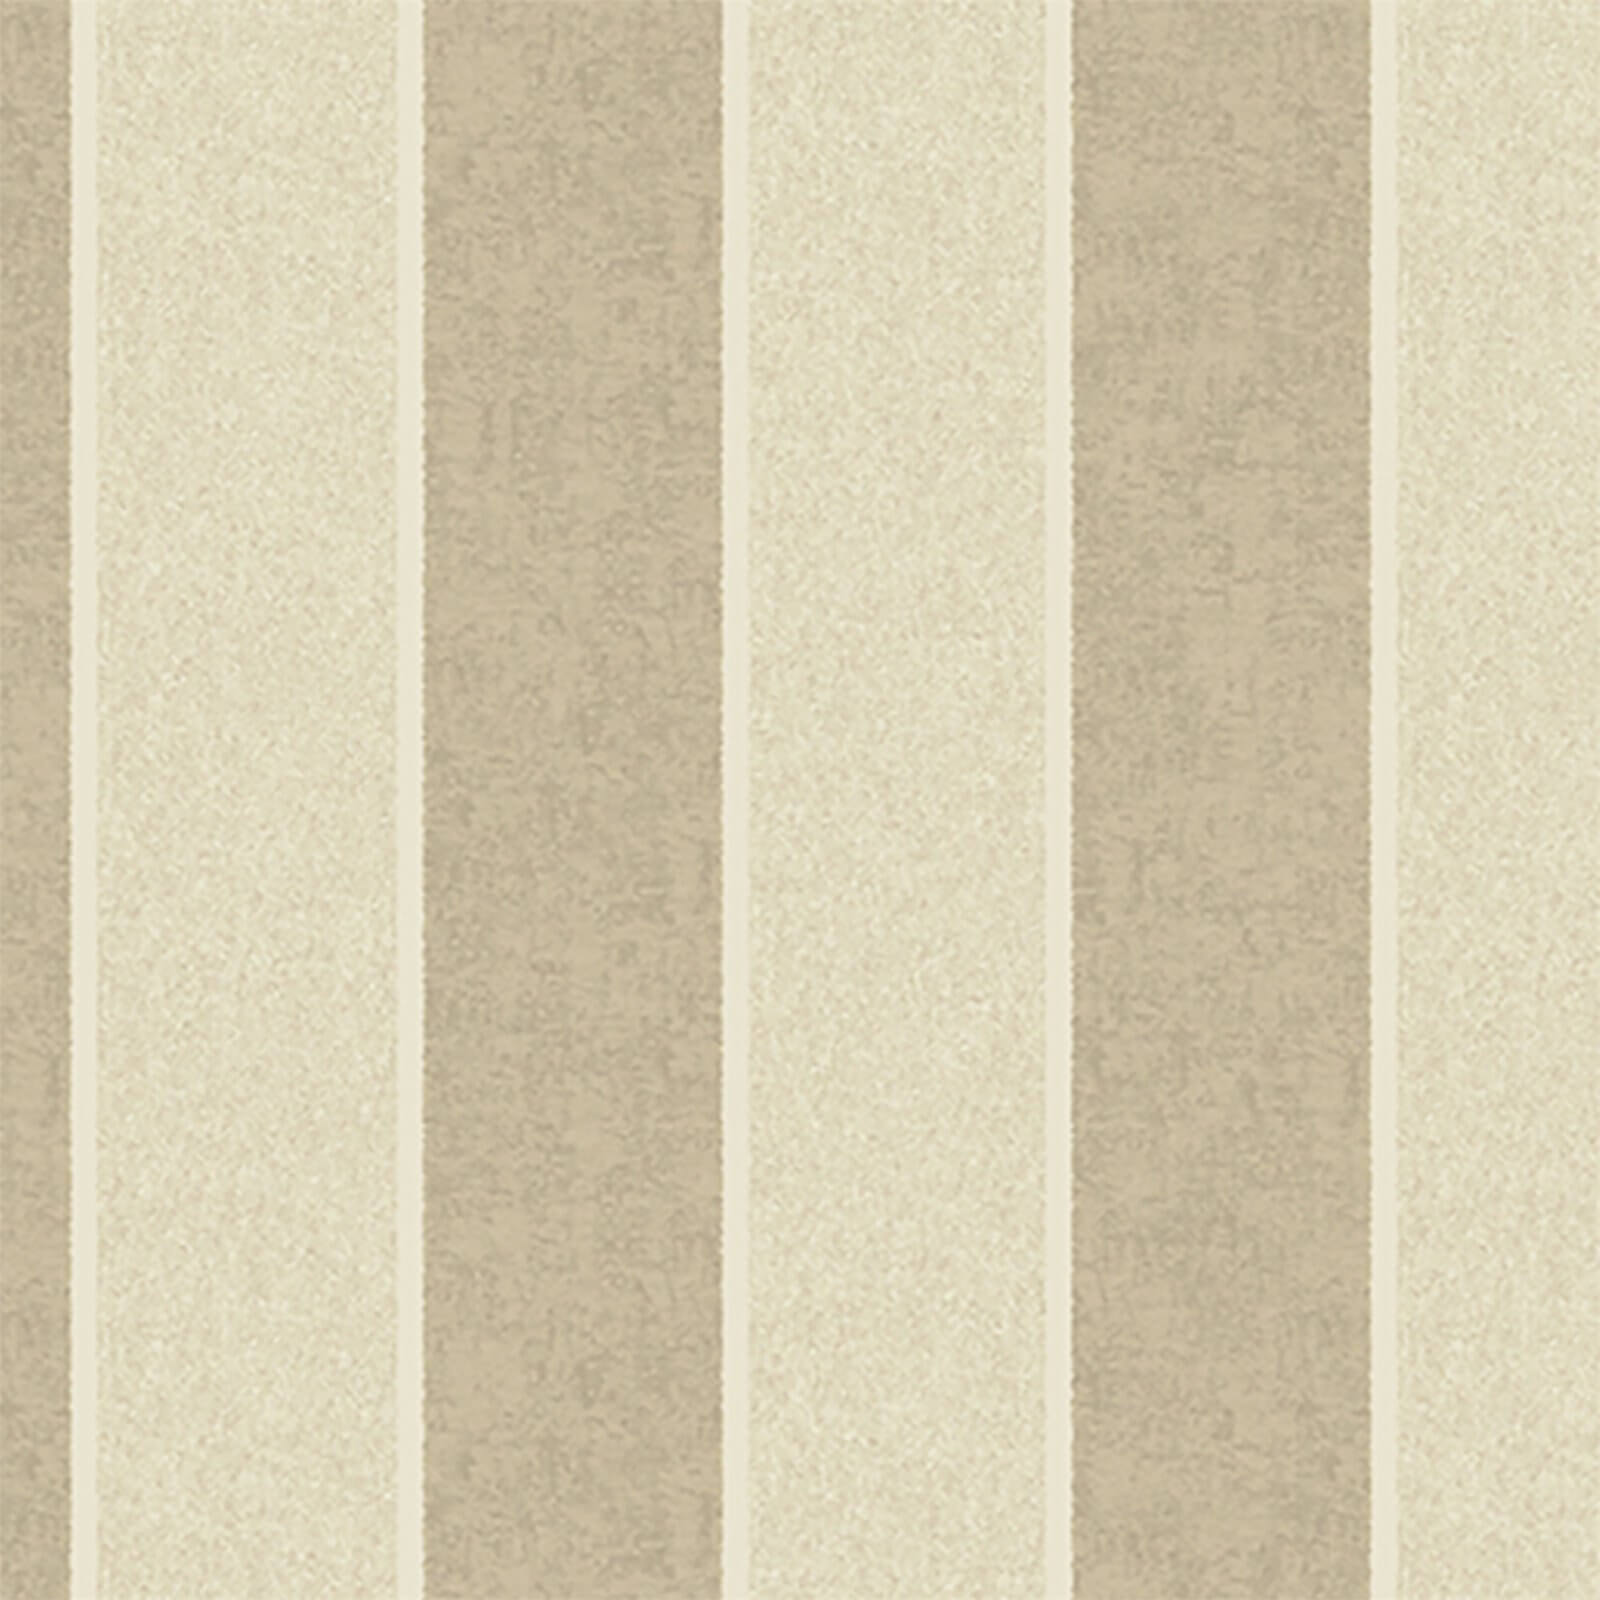 Belgravia Decor San Remo Stripe Textured Vinyl Glitter Natural Wallpaper